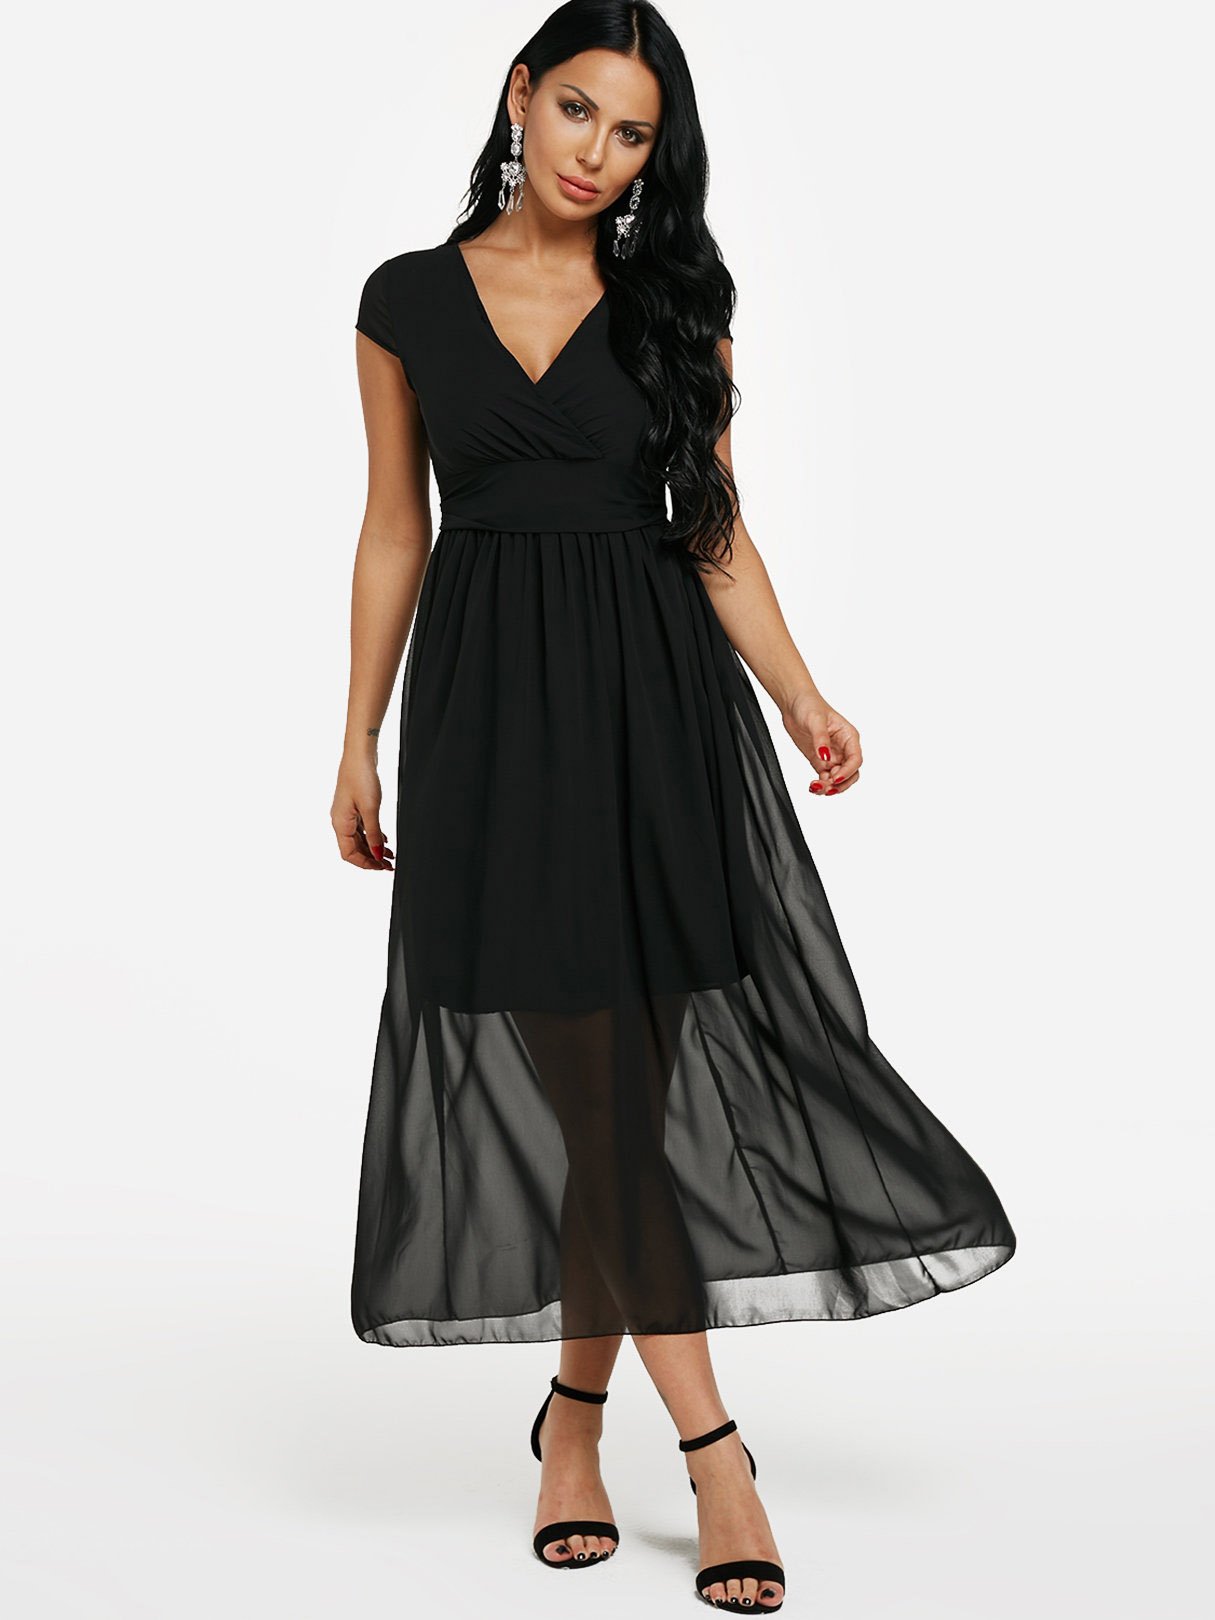 Black Chiffon Dresses